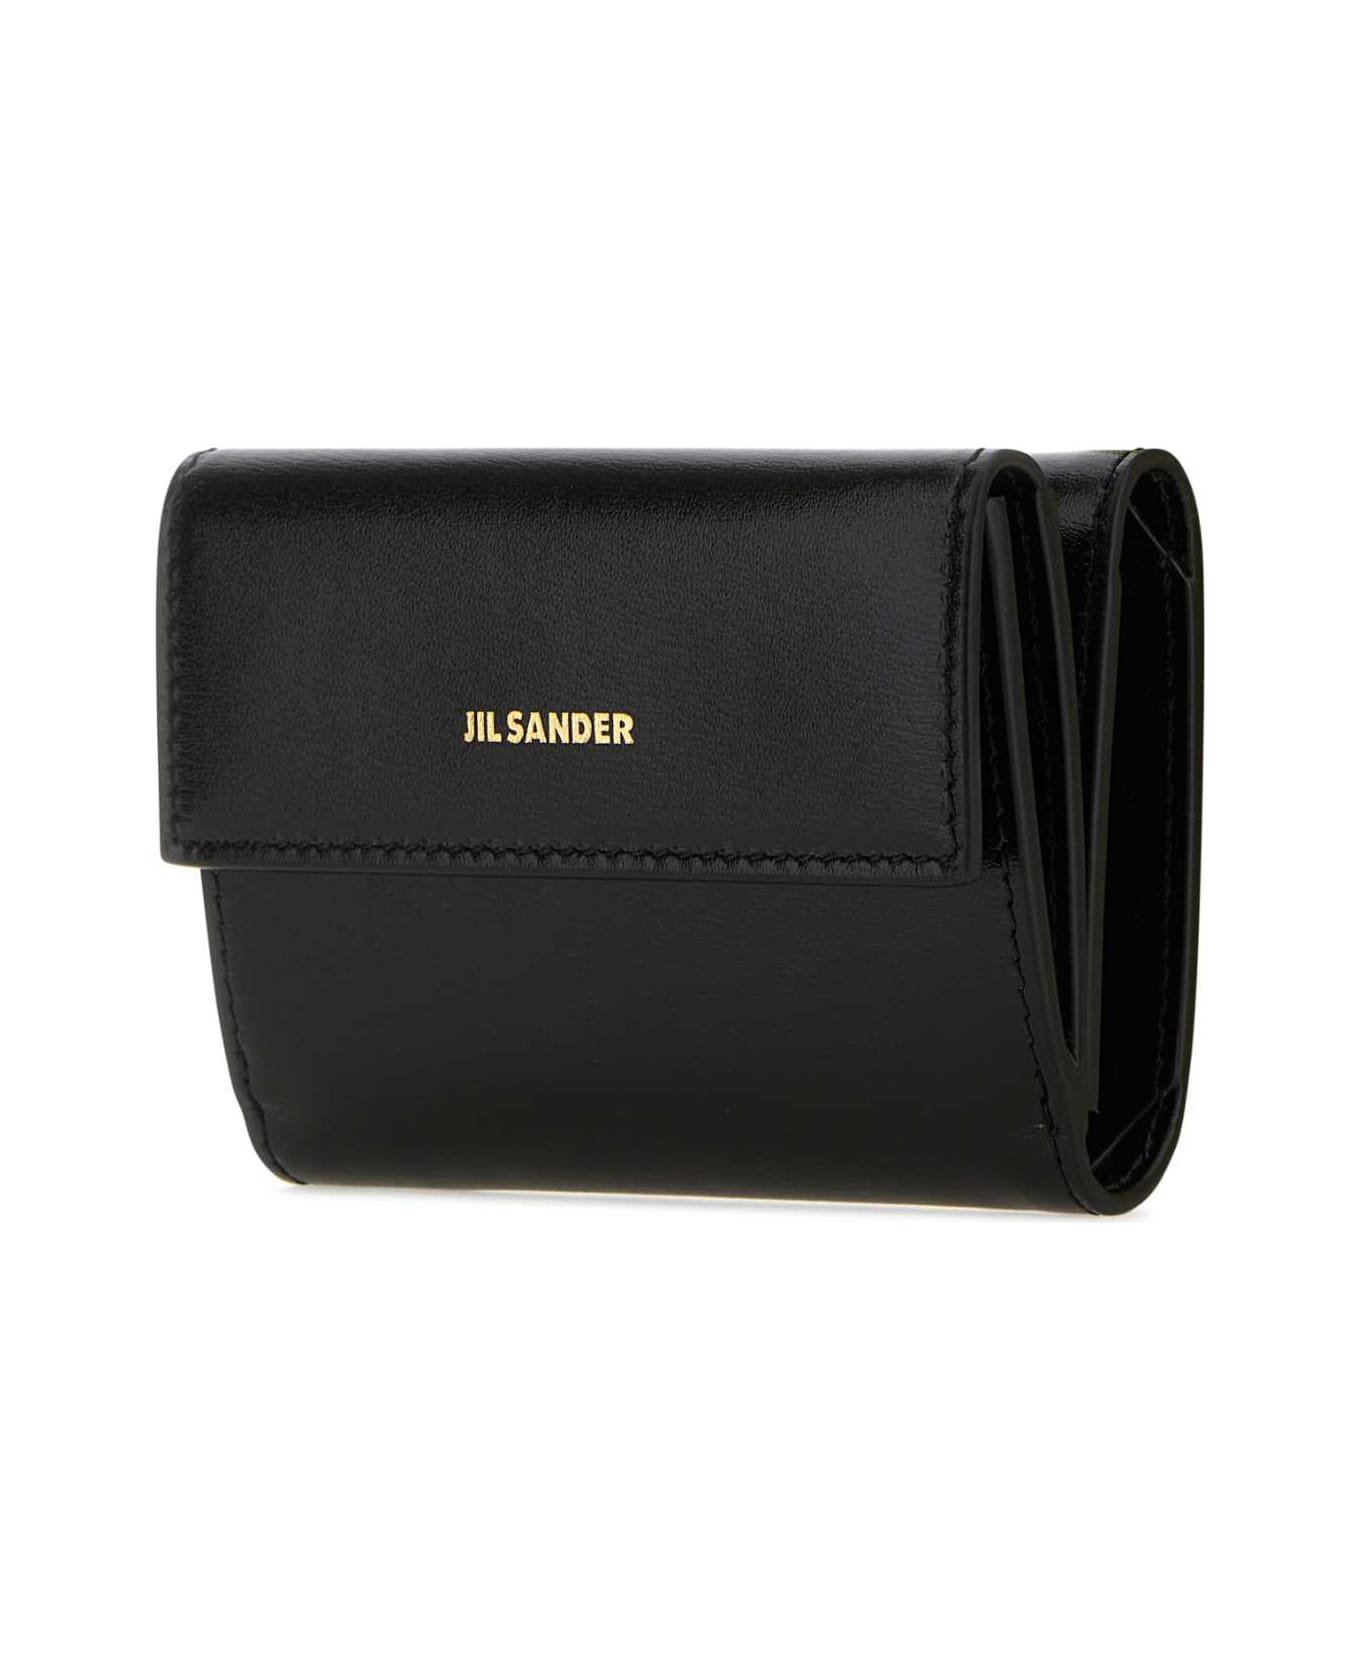 Jil Sander Black Leather Wallet - 001 財布